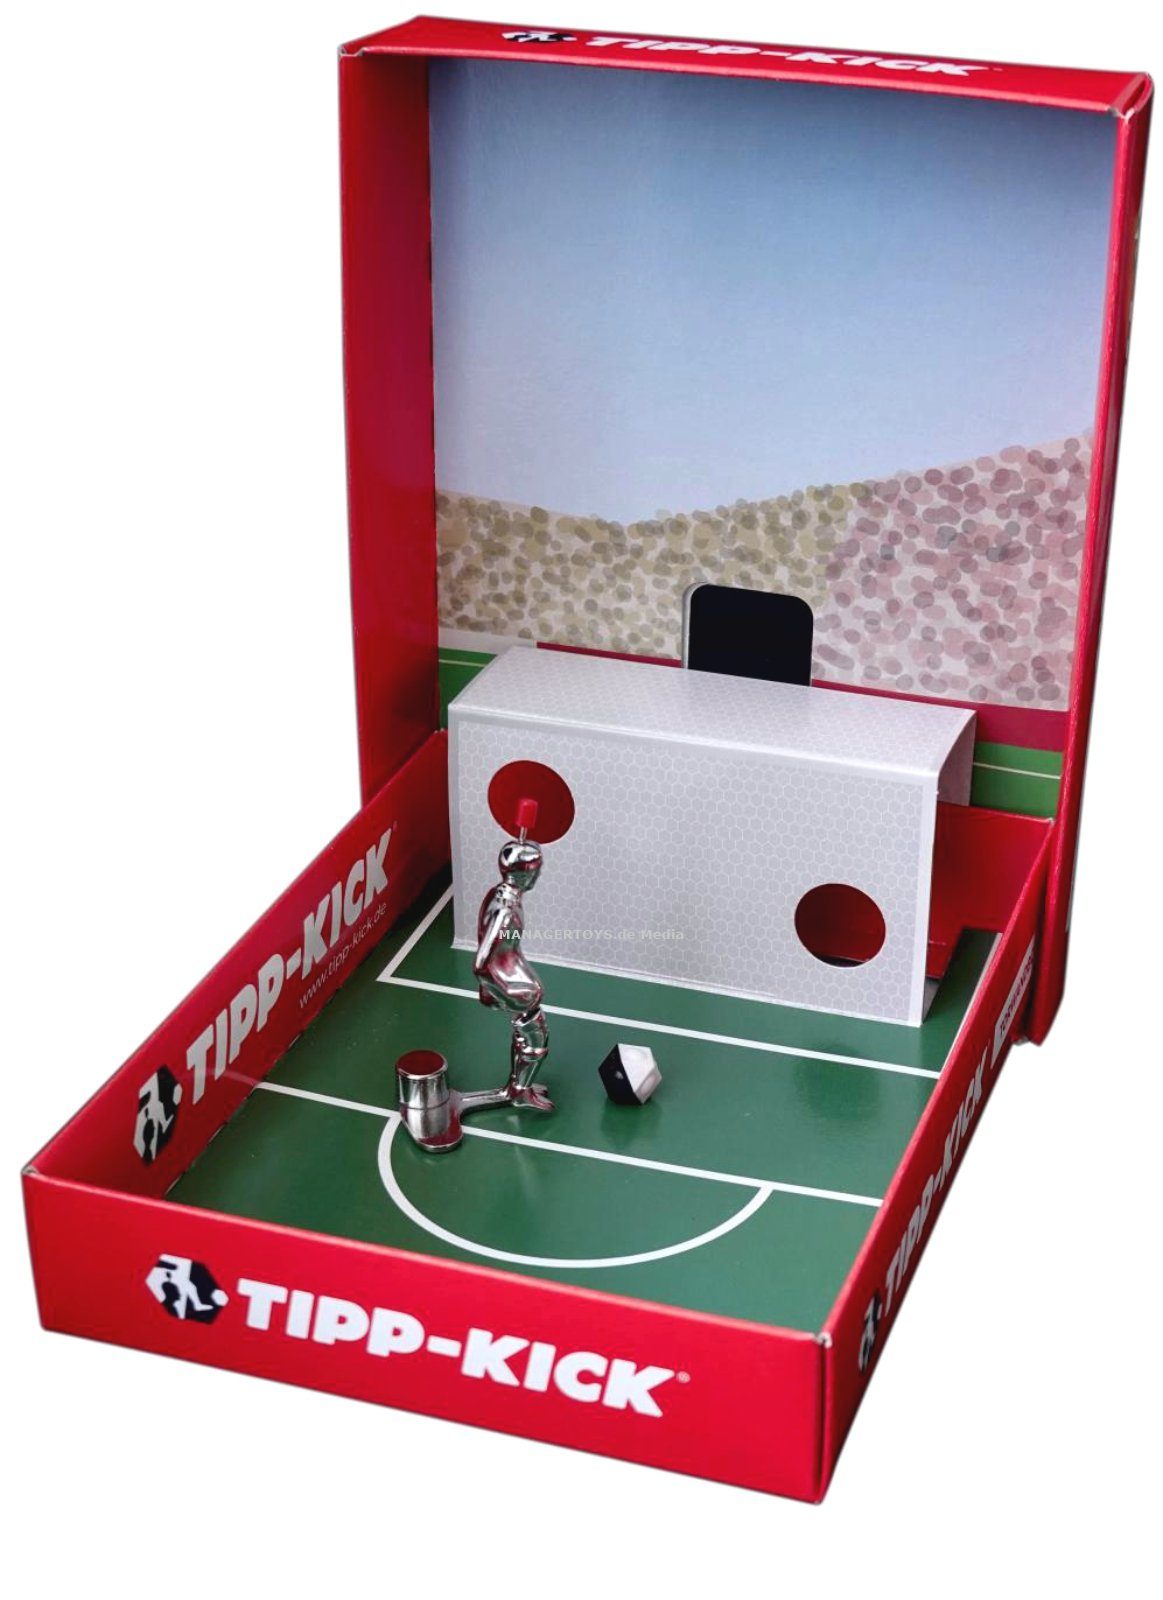 TIPP-KICK Star Kicker ITALIEN Figur Spieler Tip Kick Fussballspieler 